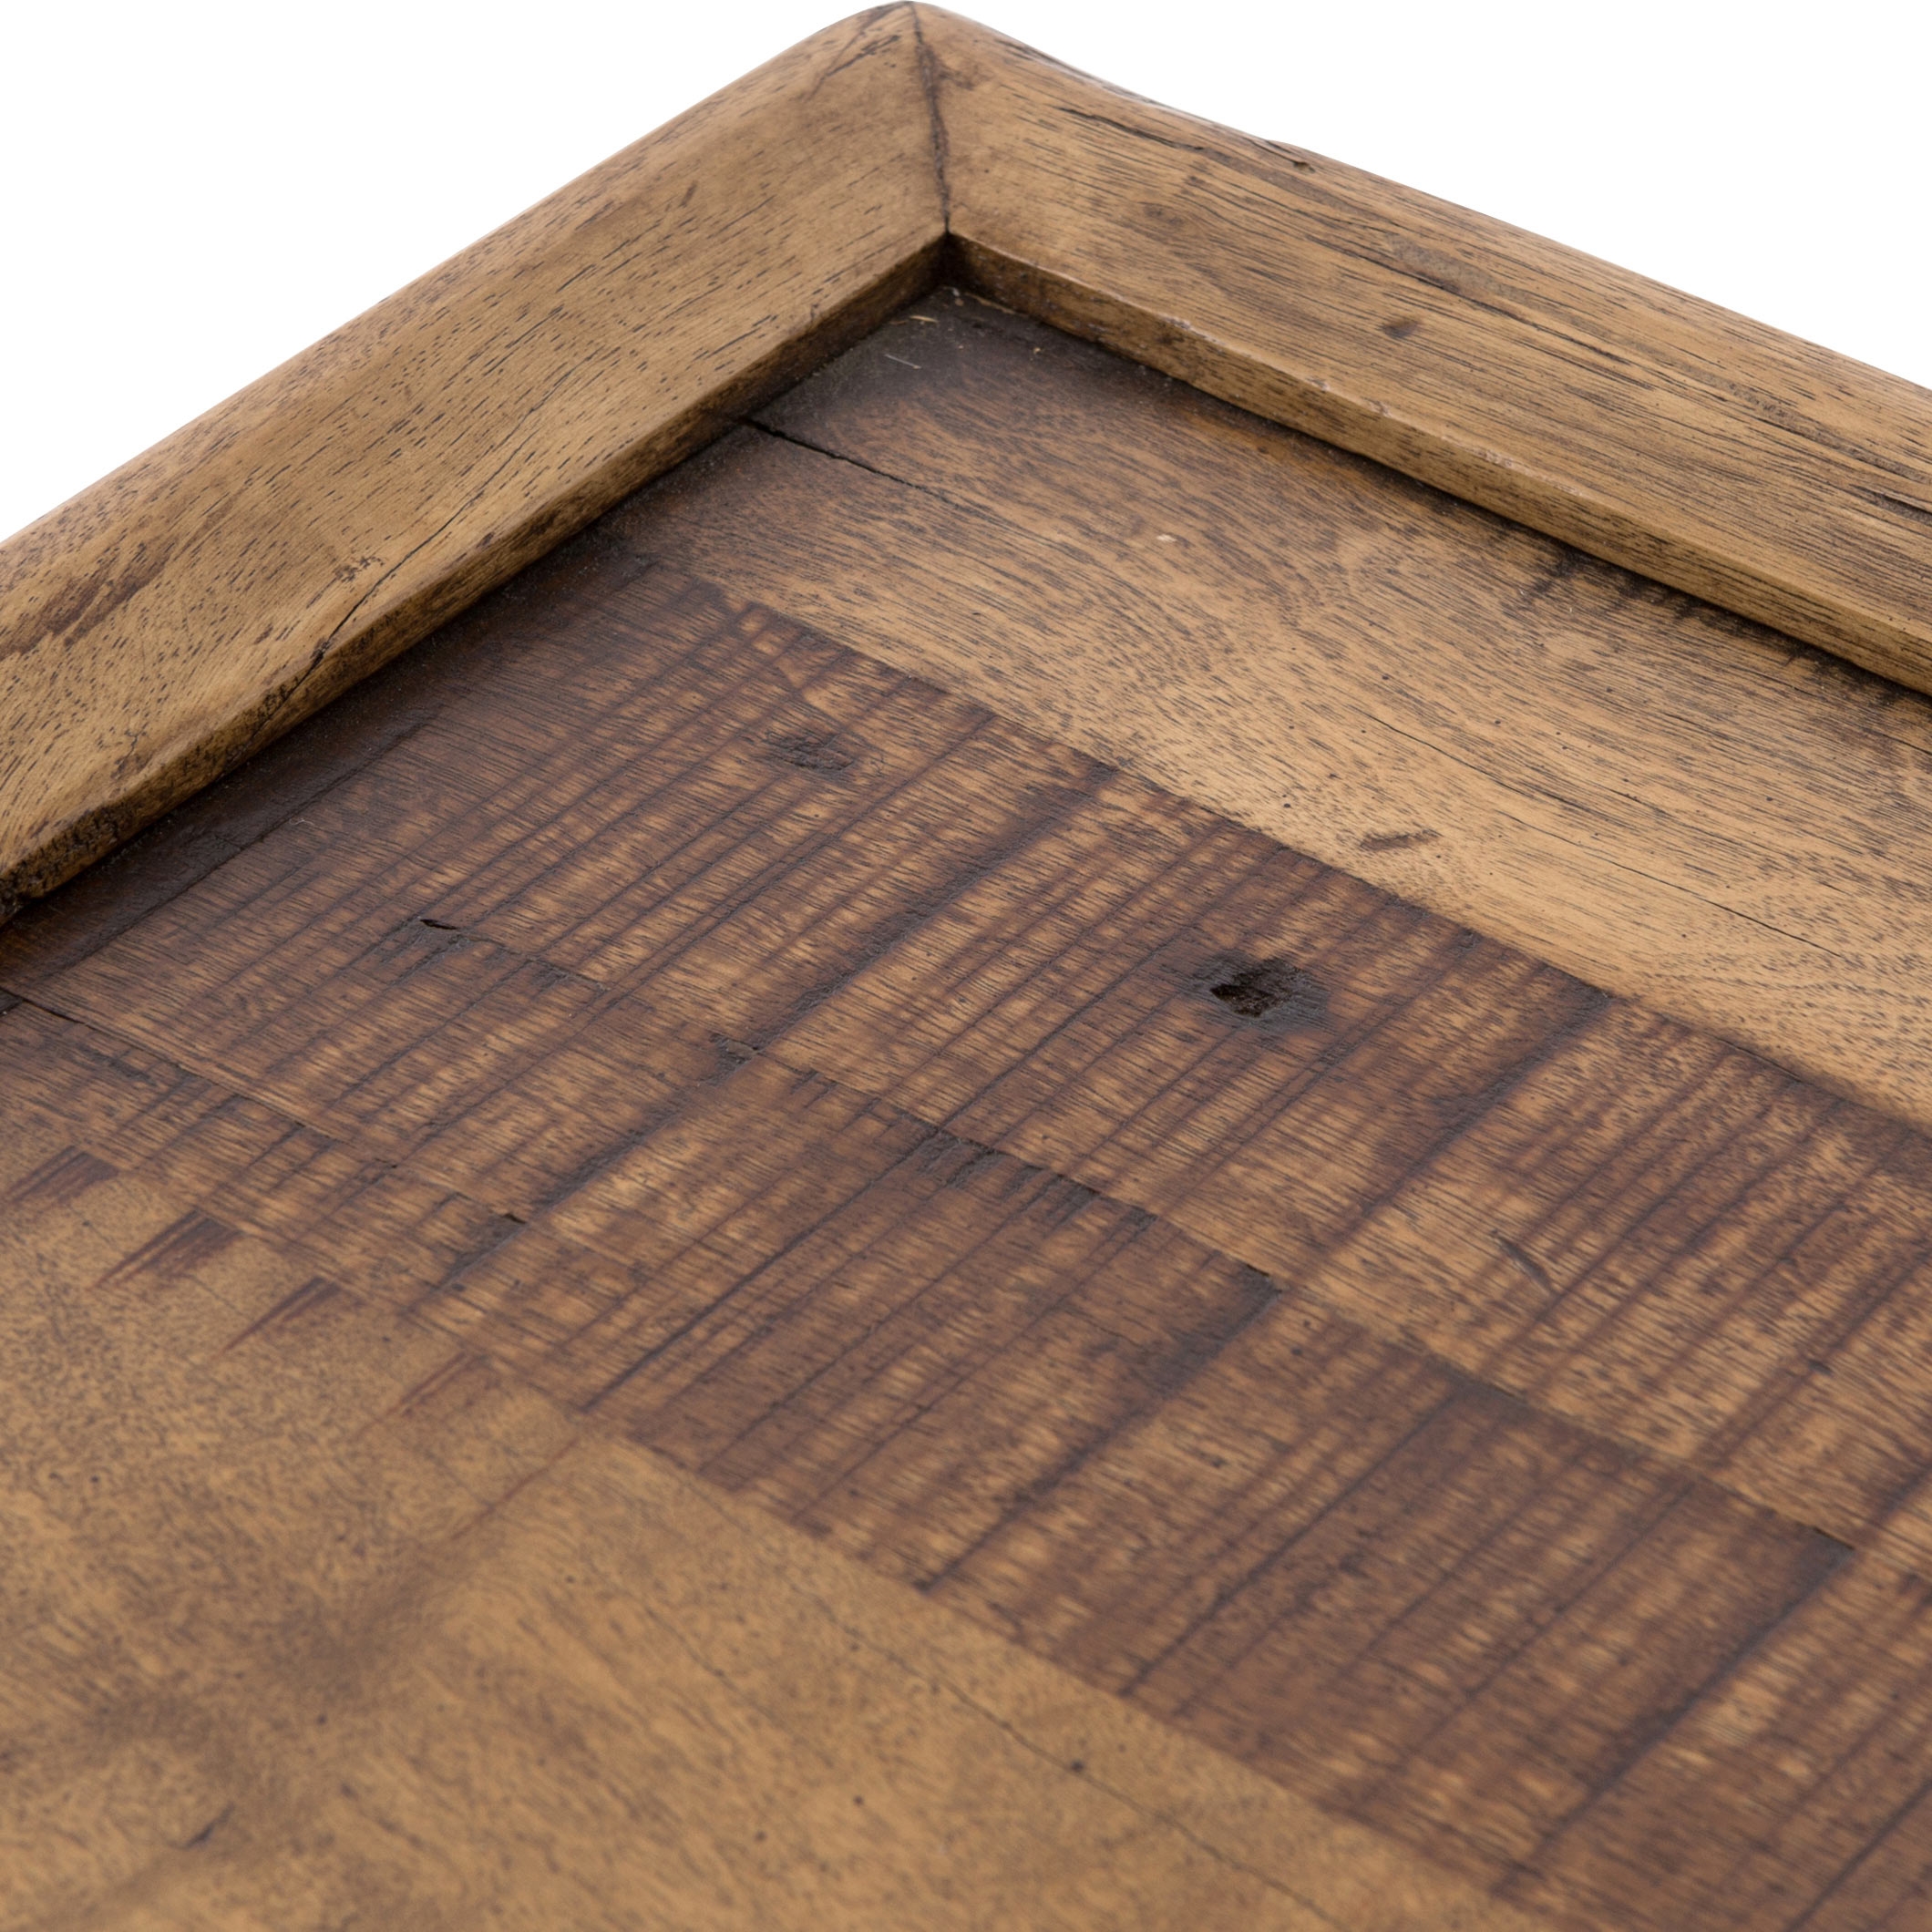 Eckard Rustic Lodge Geometric Reclaimed Wood Coffee Table - Image 4